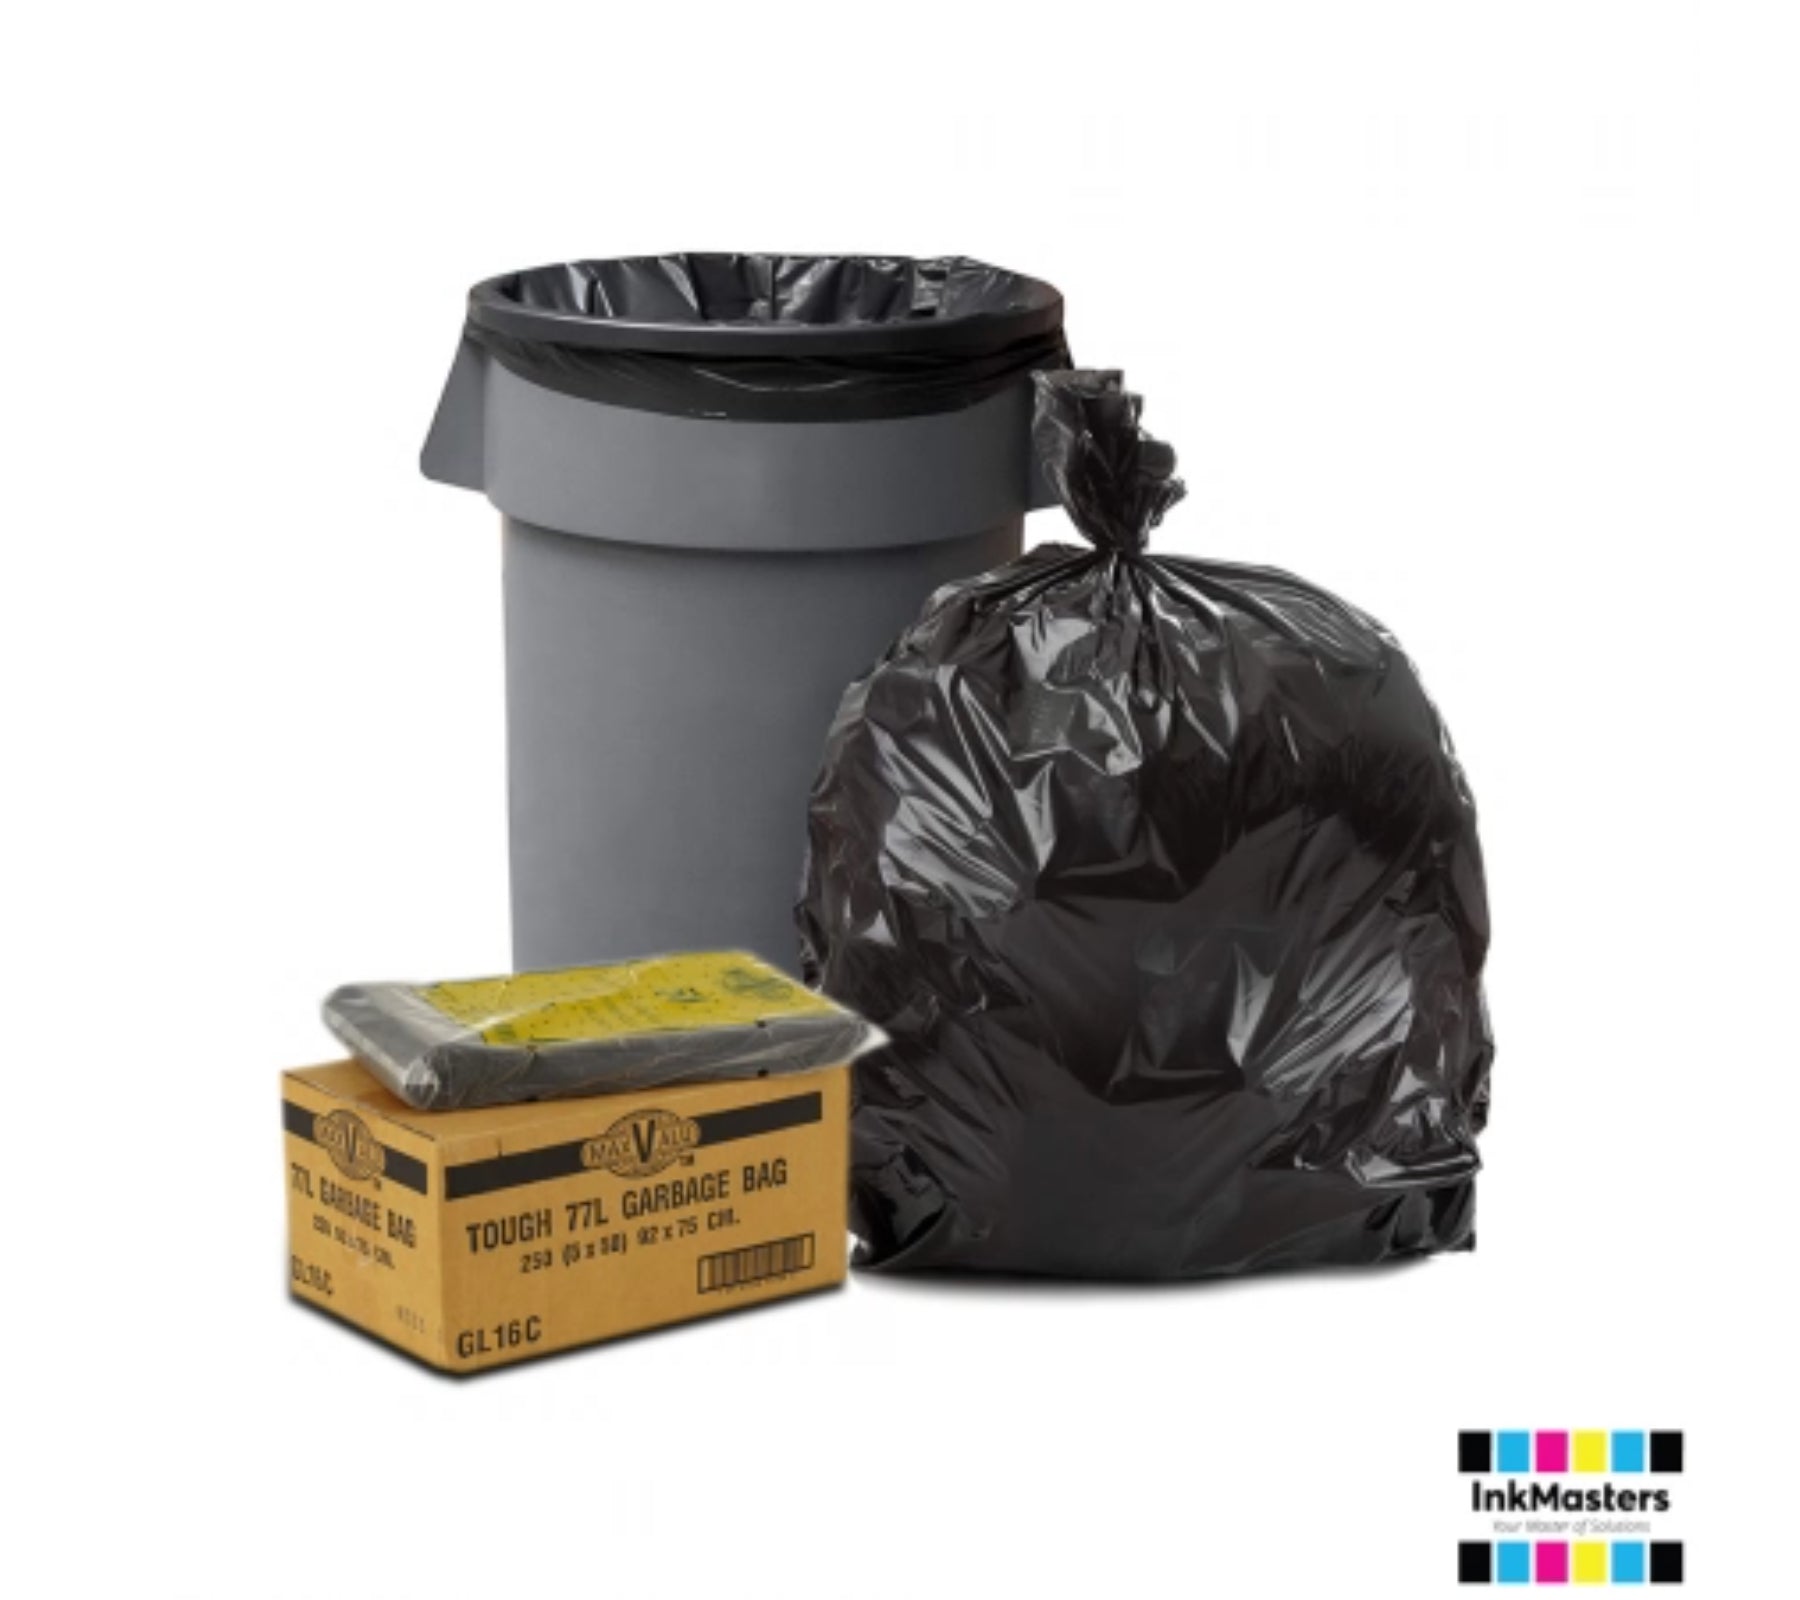 Global Industrial™ Super Duty Black Trash Bags - 65-70 Gallon, 2.5 Mil, 75  Bags/Case